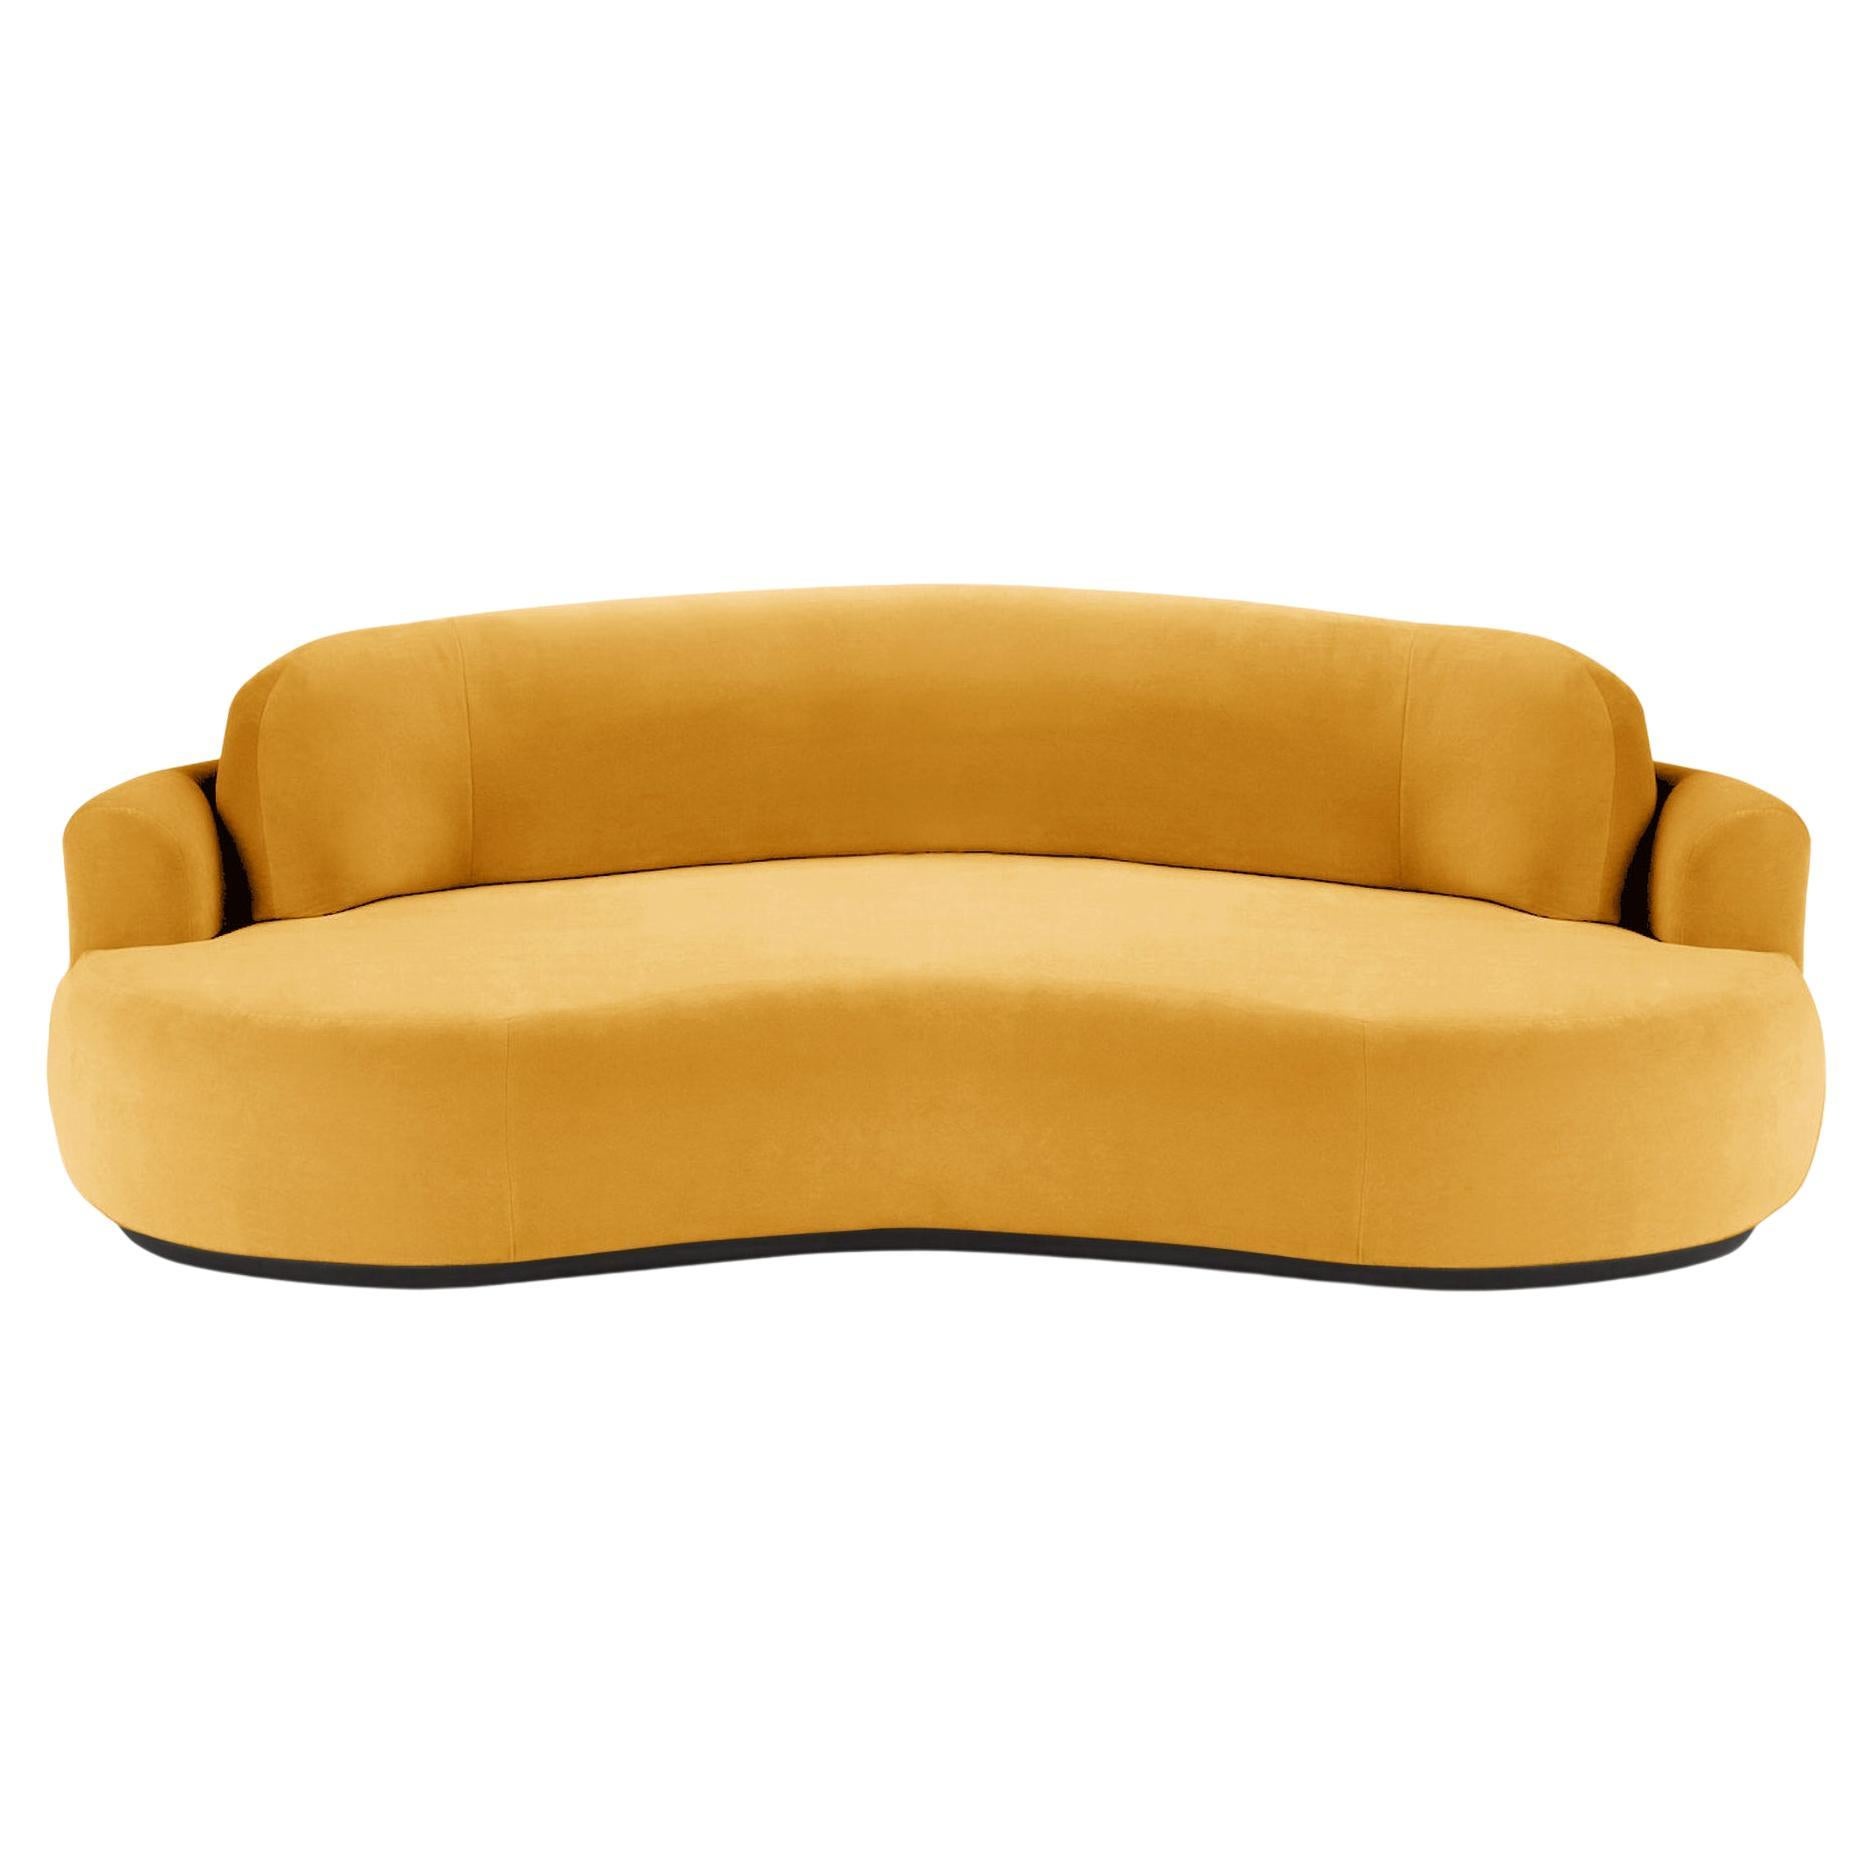 Naked Round Sofa, Medium with Beech Ash-056-5 and Corn